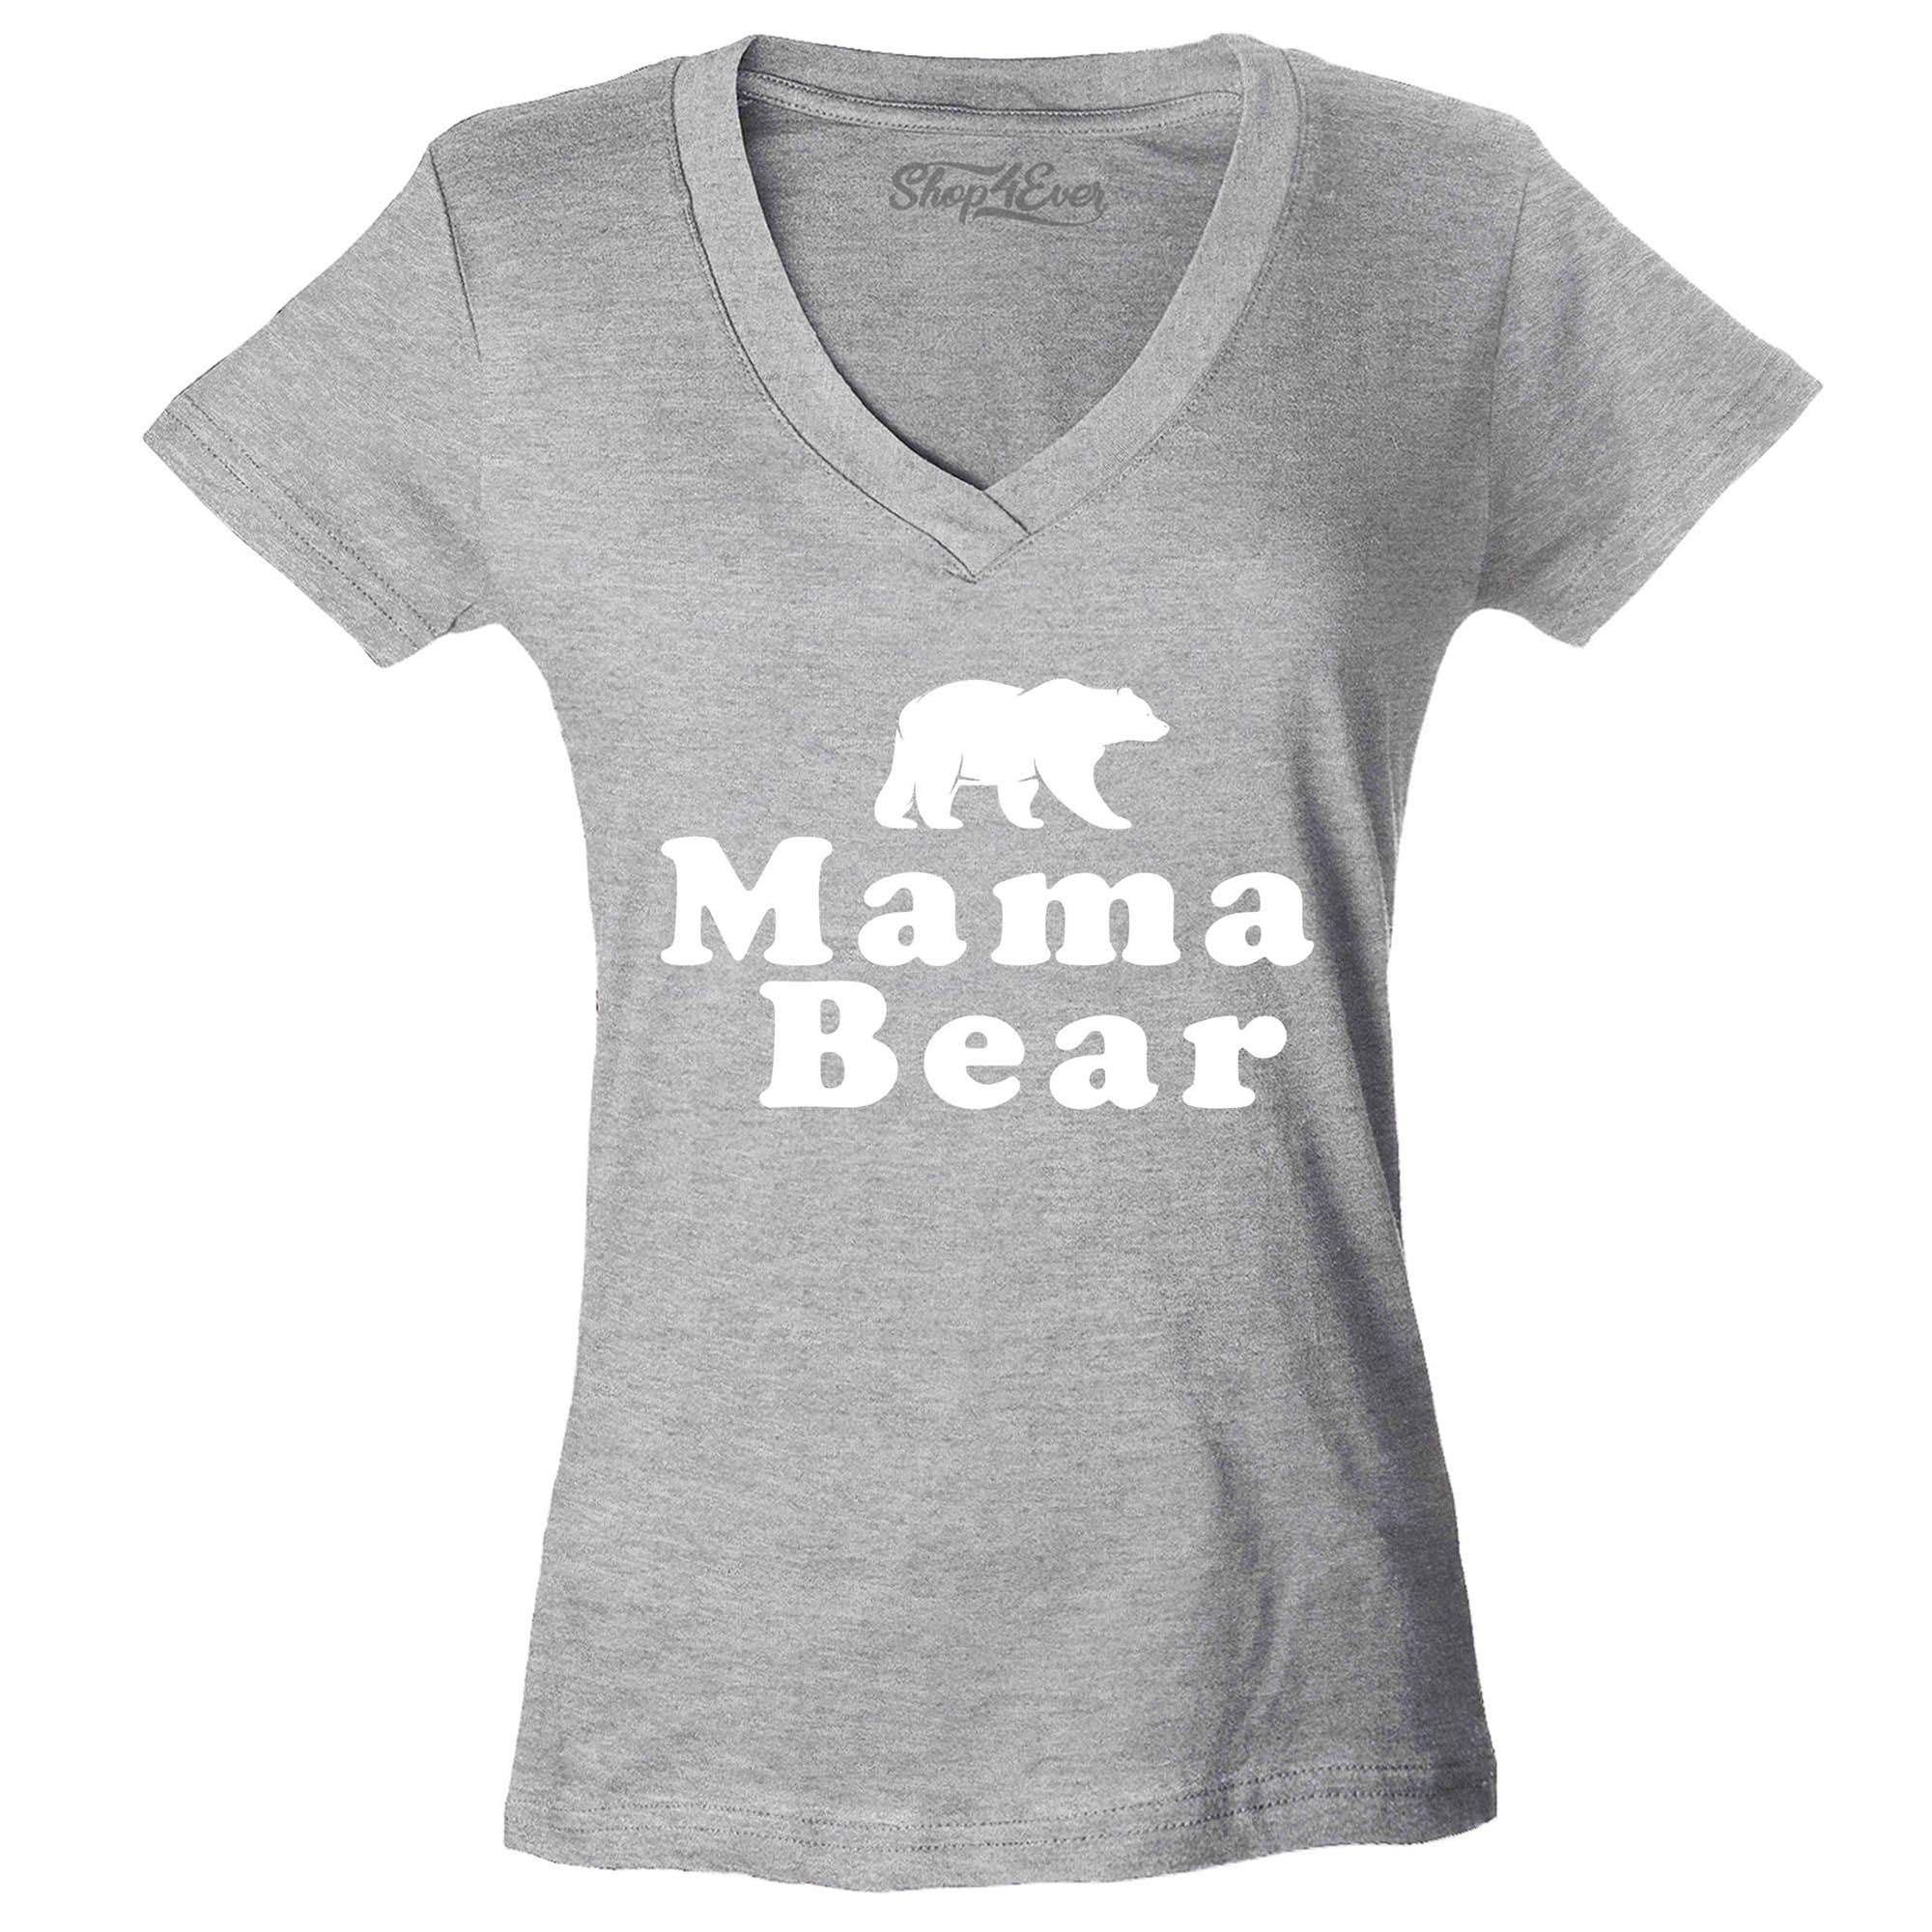 Mama Bear Women's V-Neck T-Shirt Slim FIT